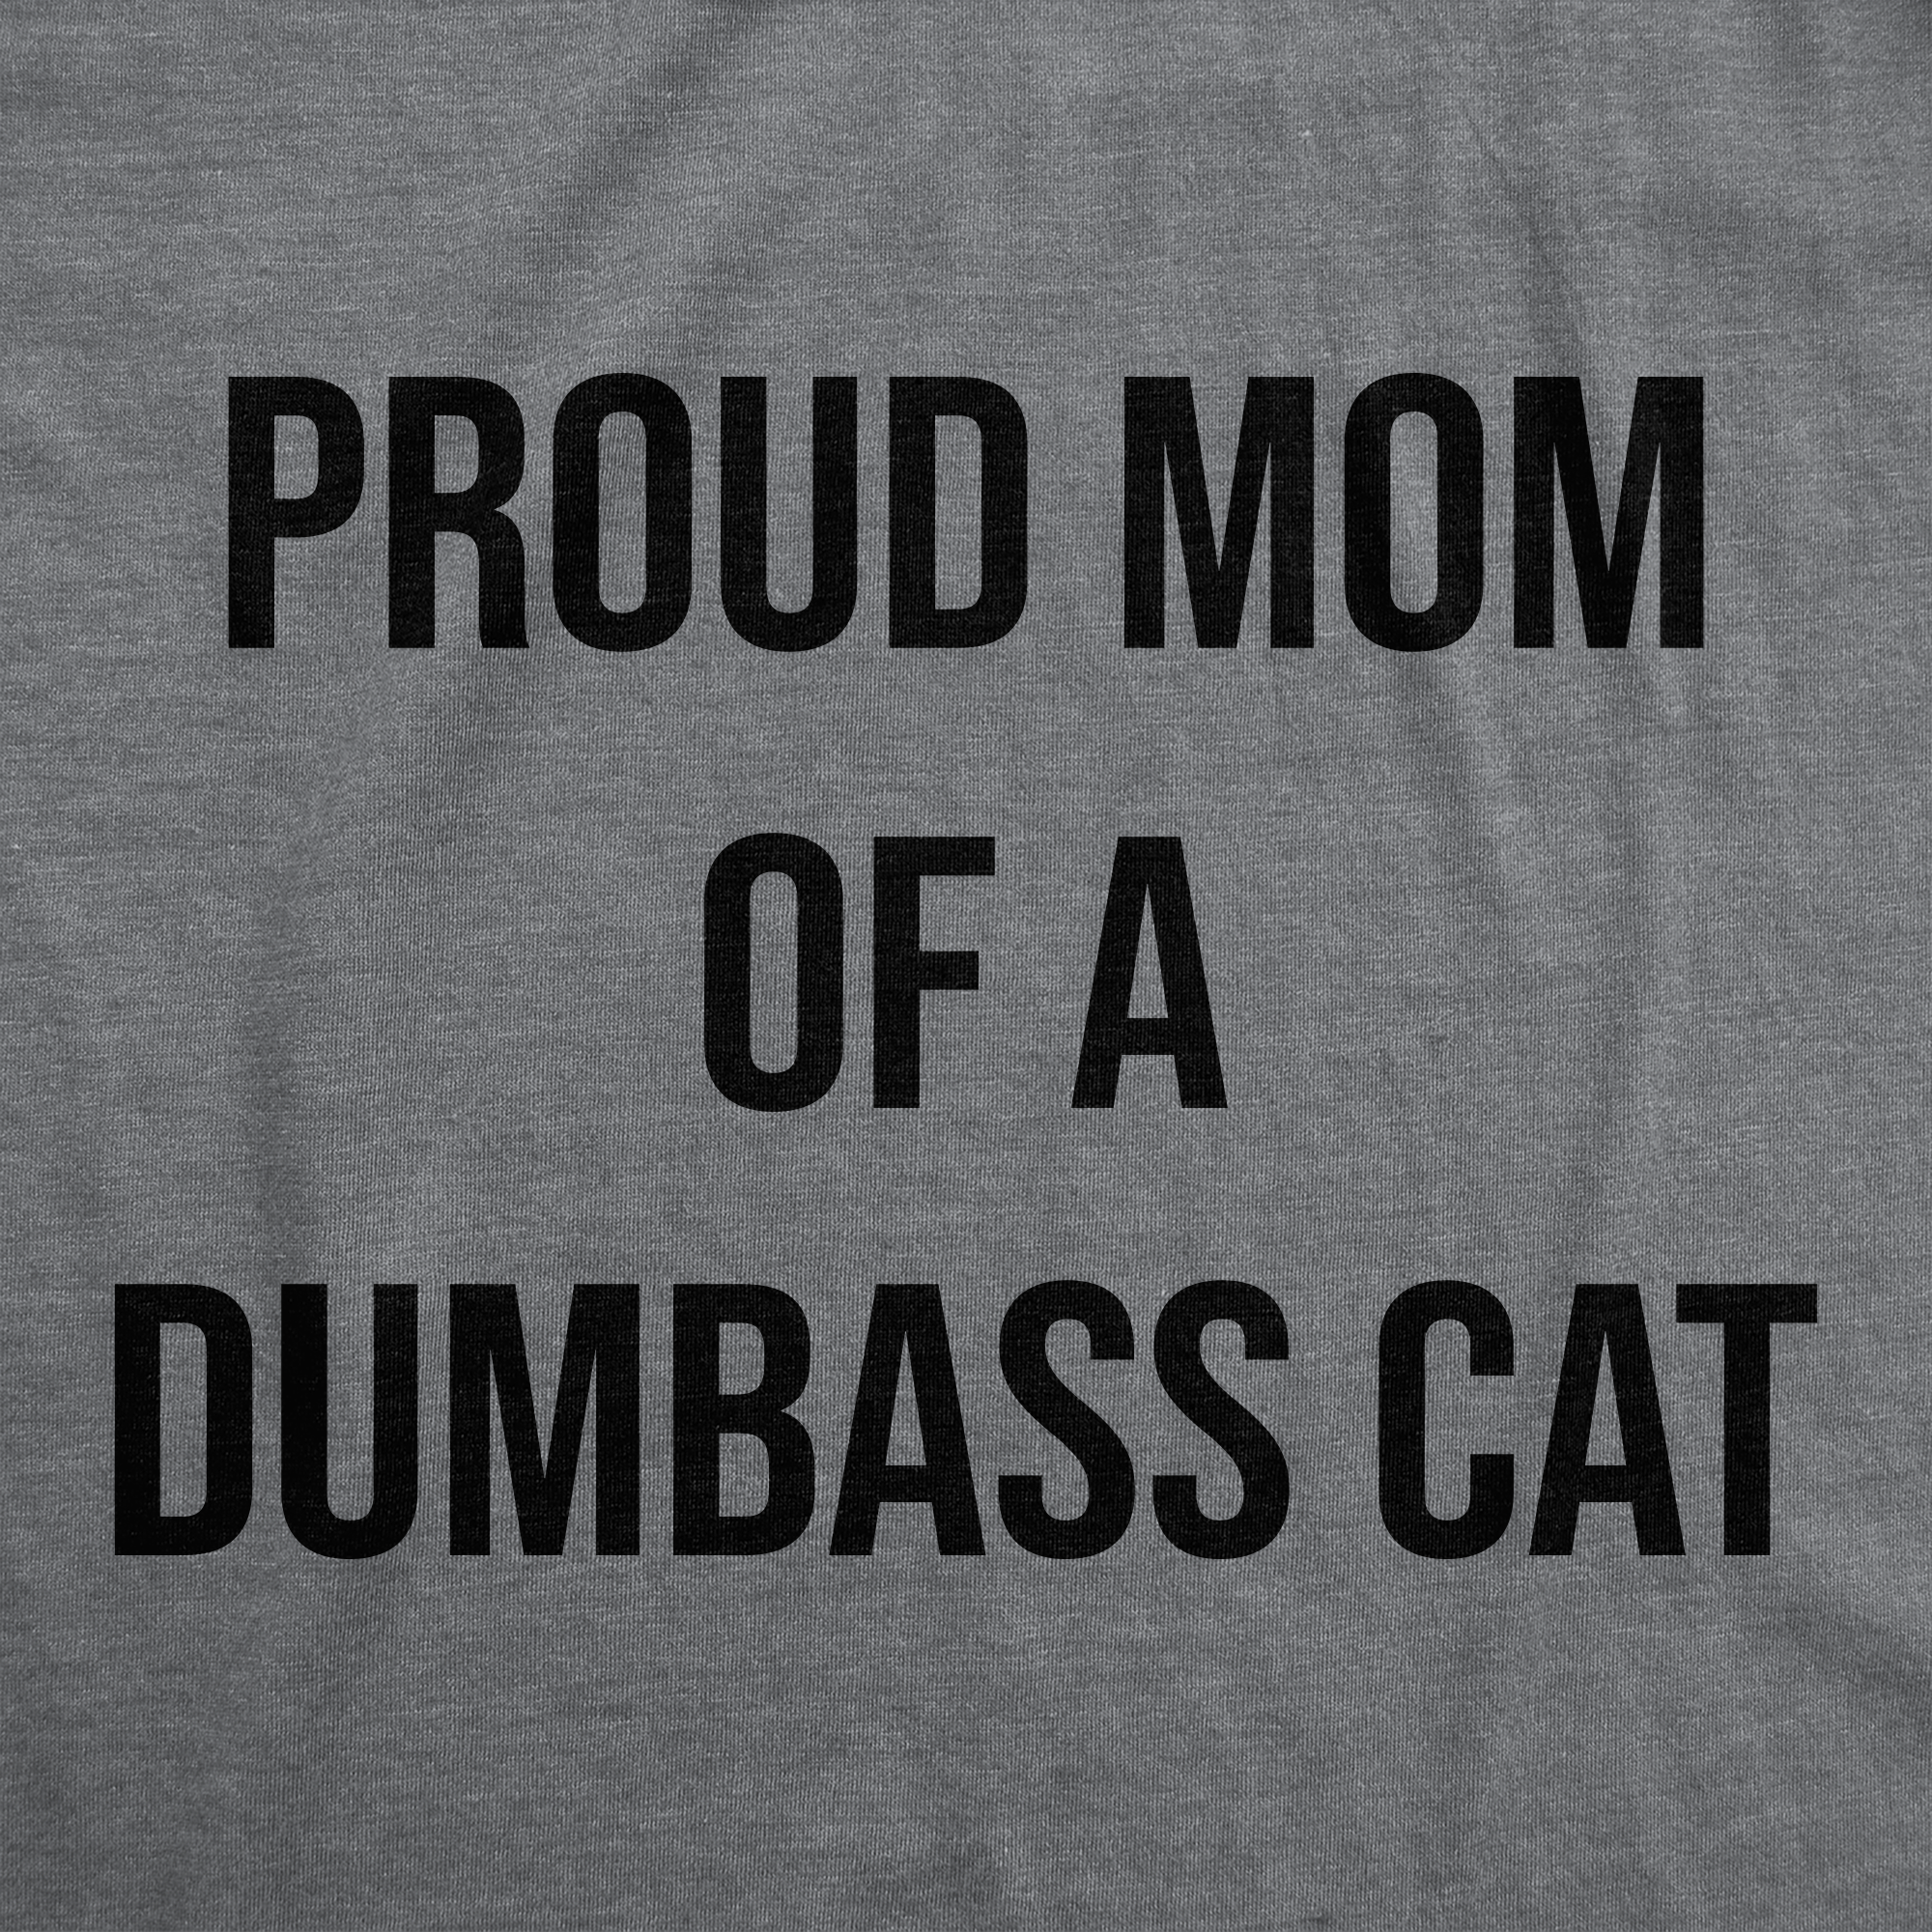 Funny Dark Heather Grey - Proud Mom Cat Proud Mom Of A Dumbass Cat Womens T Shirt Nerdy Cat Tee